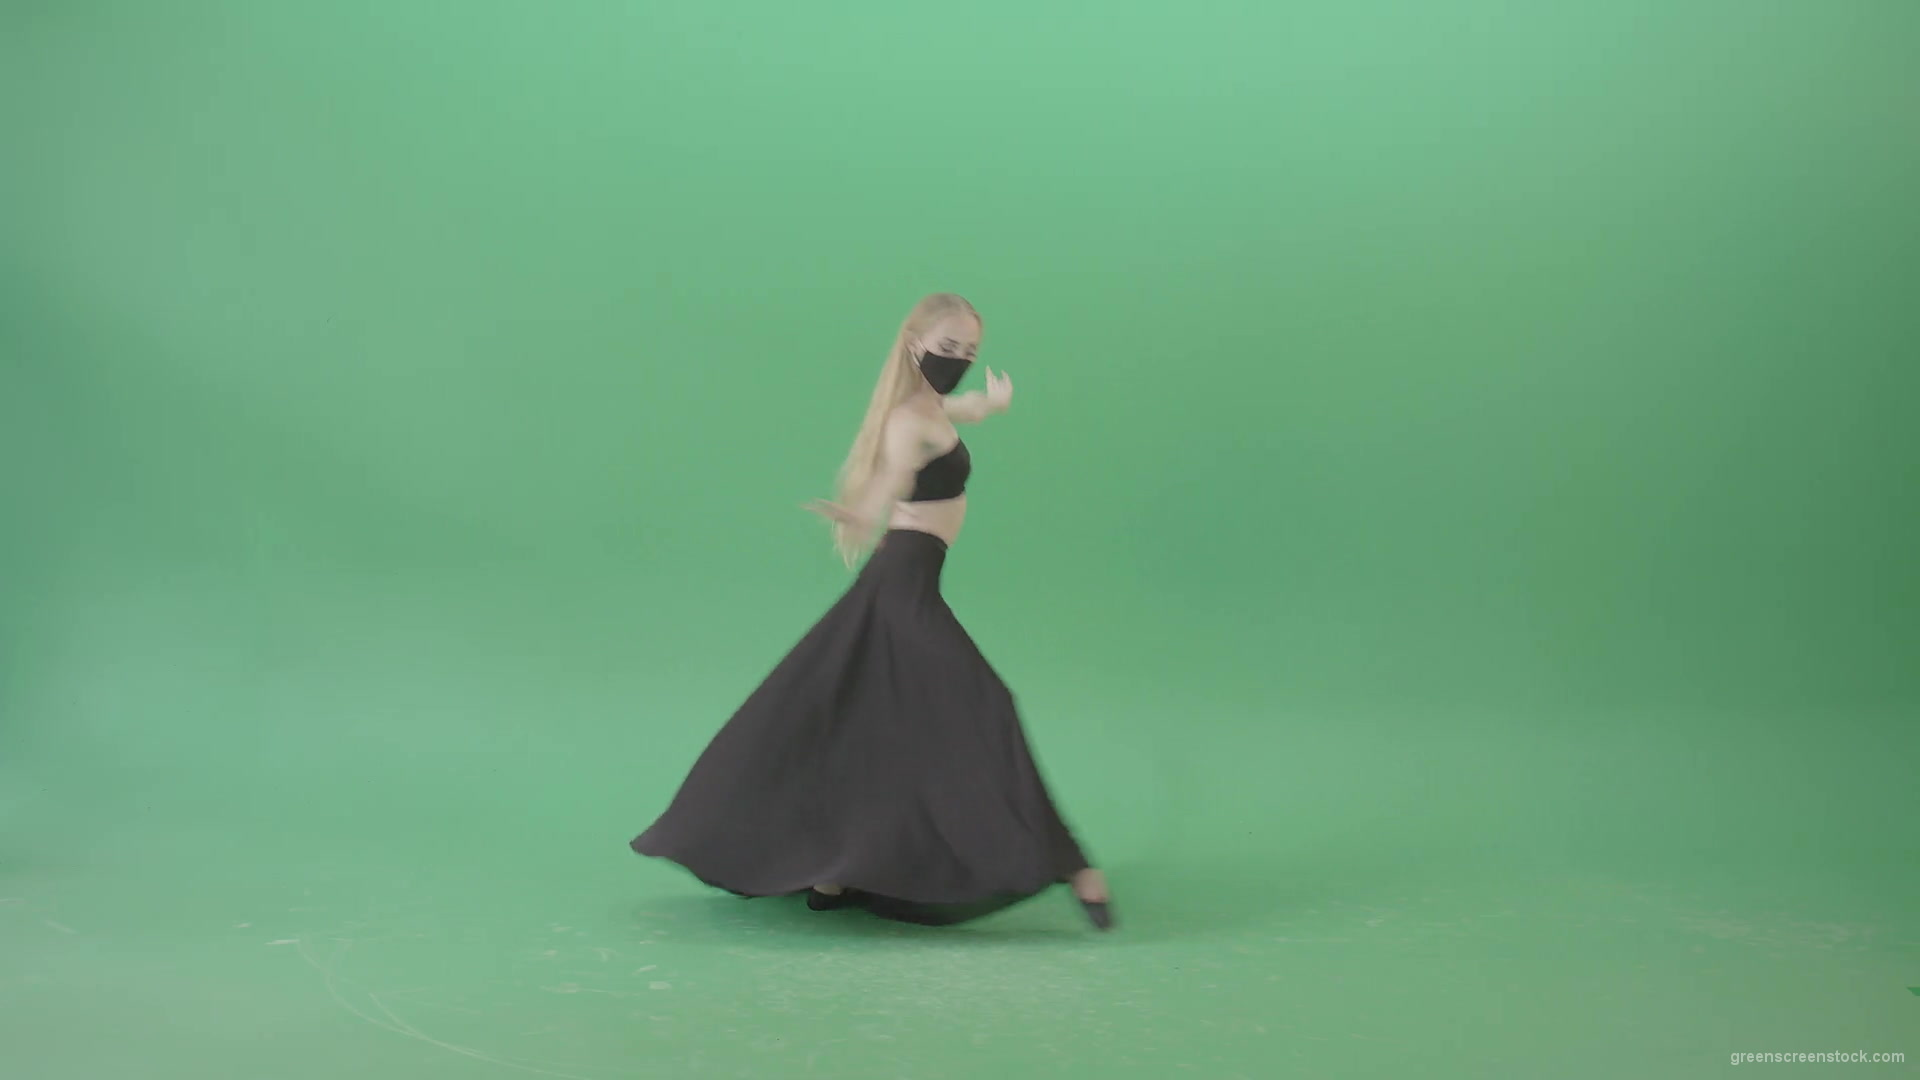 Blonde-Ballet-girl-in-black-dress-and-mask-dancing-Corona-Virus-flamenco-on-green-screen-4K-Video-Footage-1920_002 Green Screen Stock